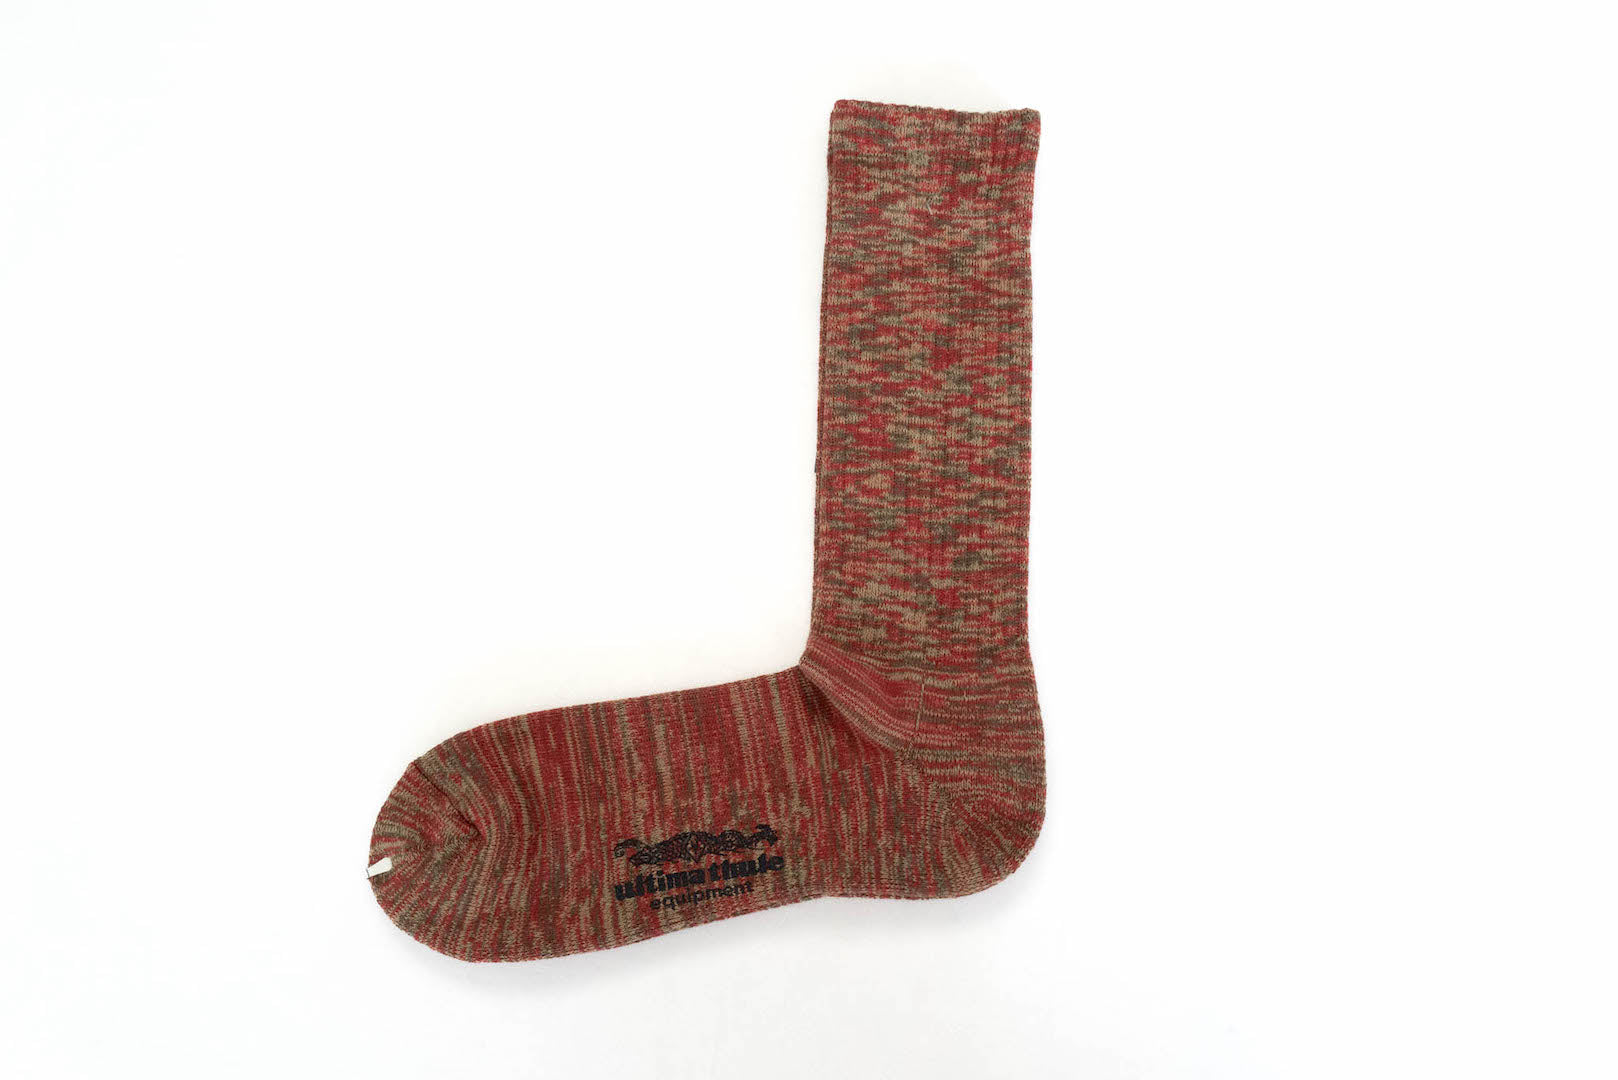 Freewheelers "Barlow" 10-inch Heather Boot Socks